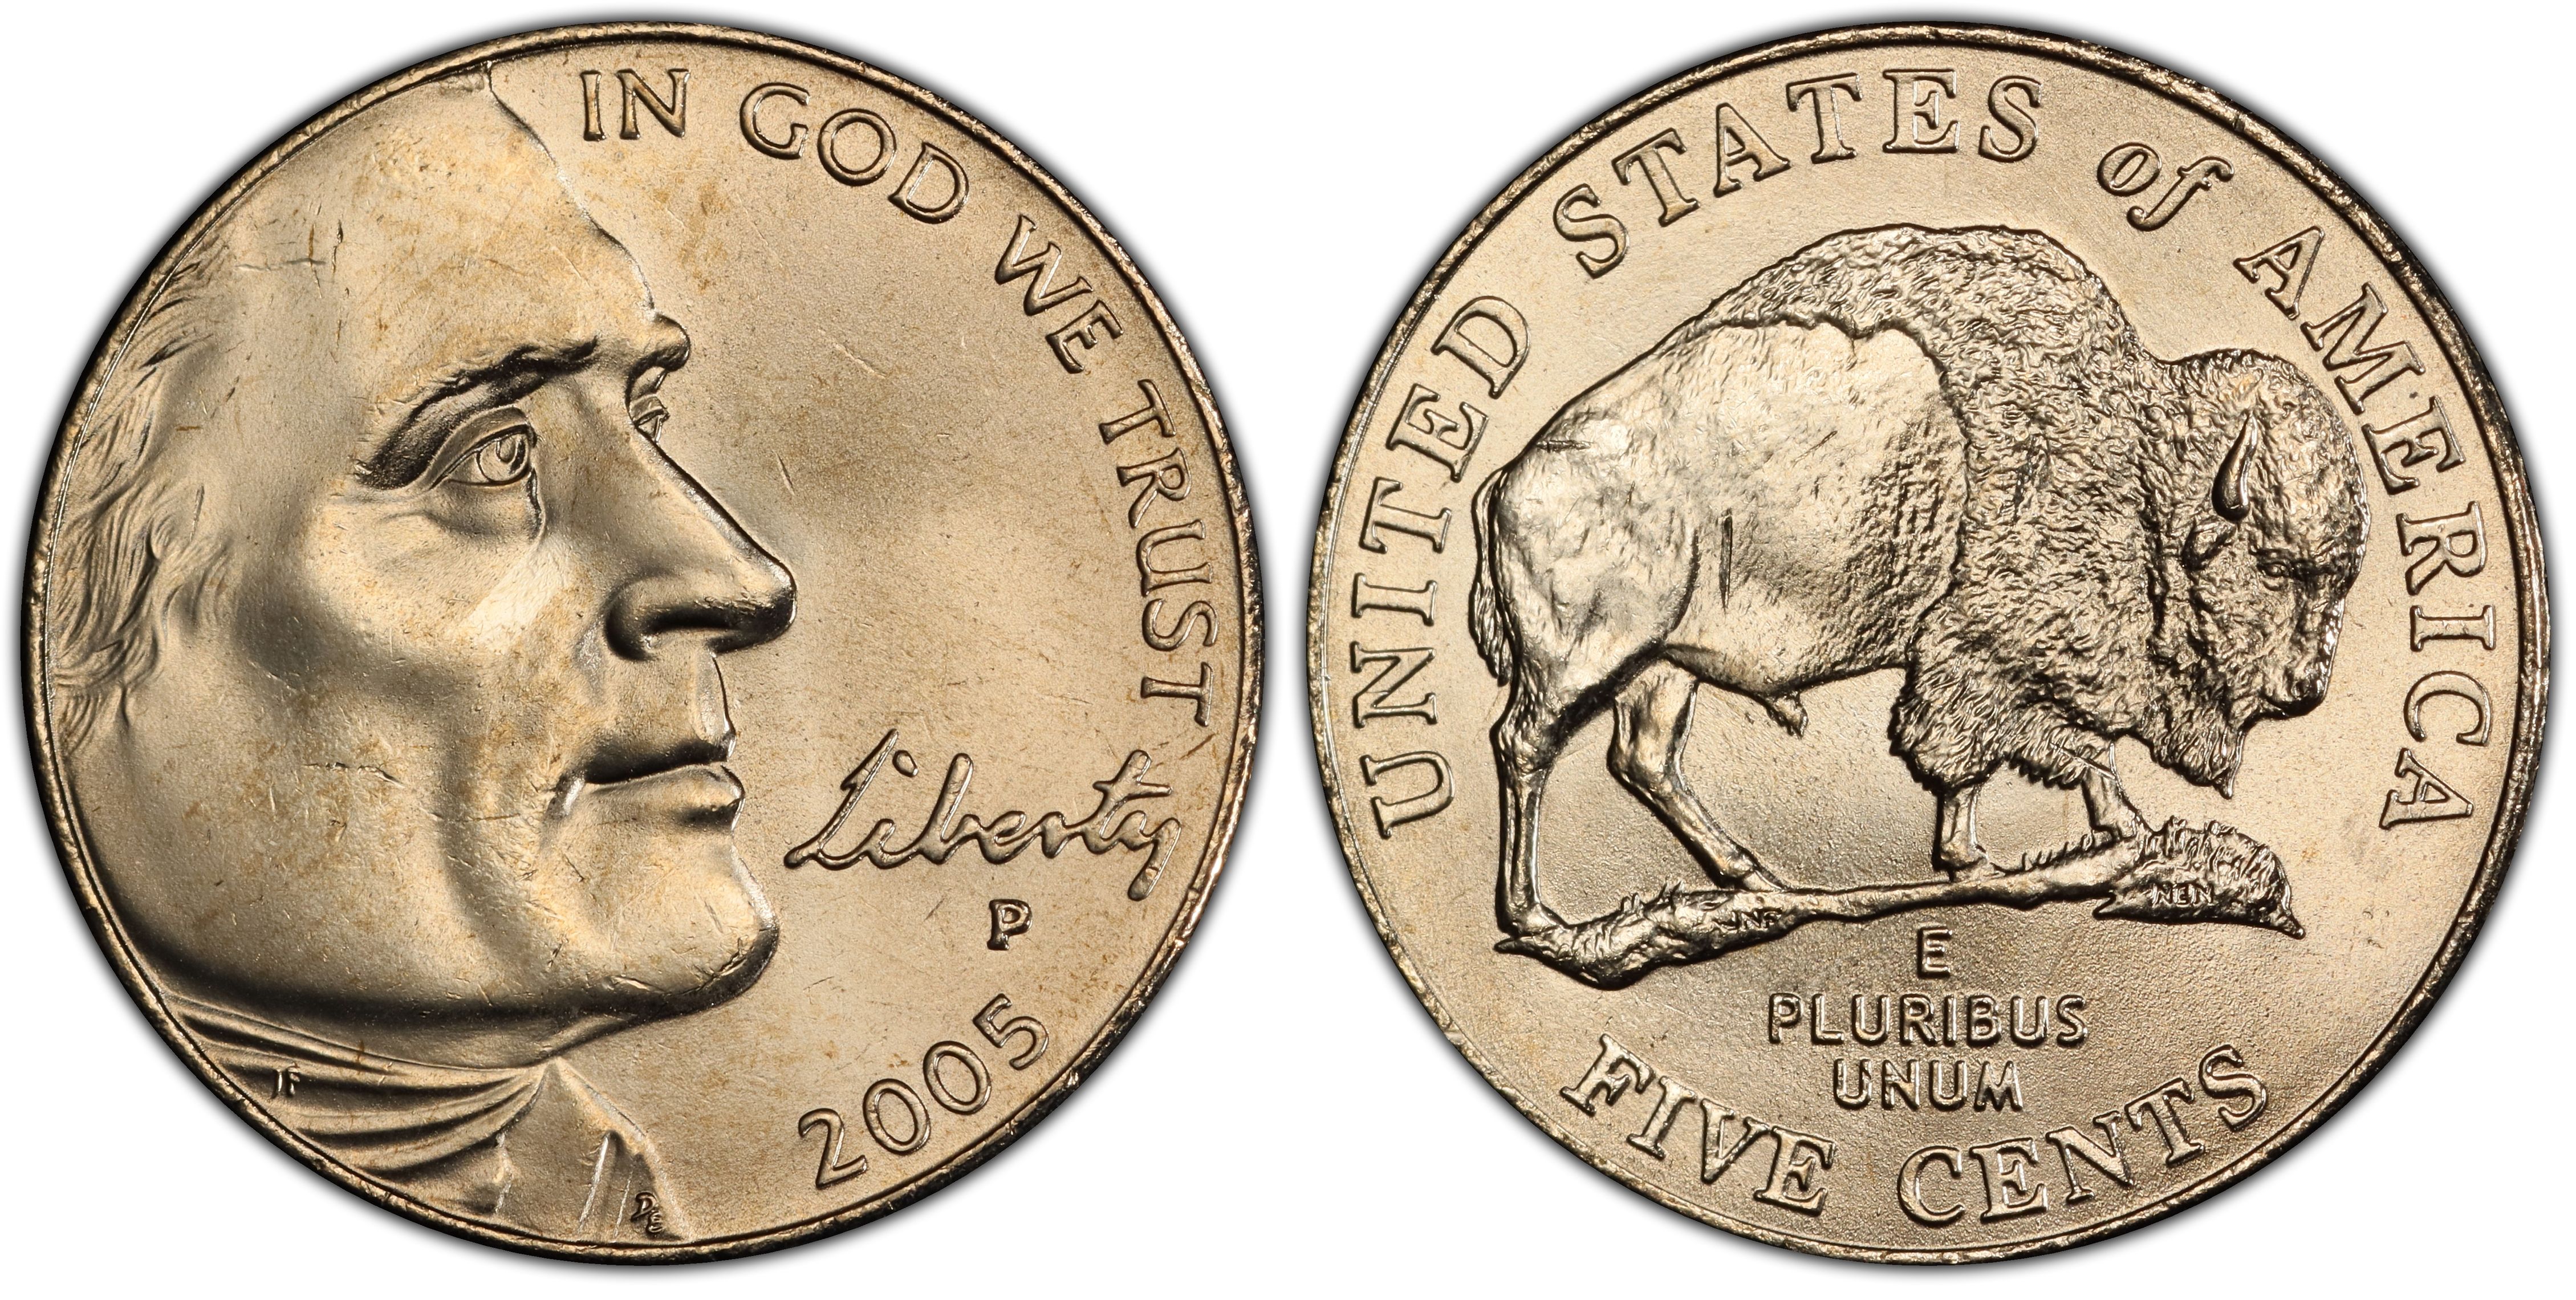 Buffalo Nickels: A Brief History and a Sampling of Values